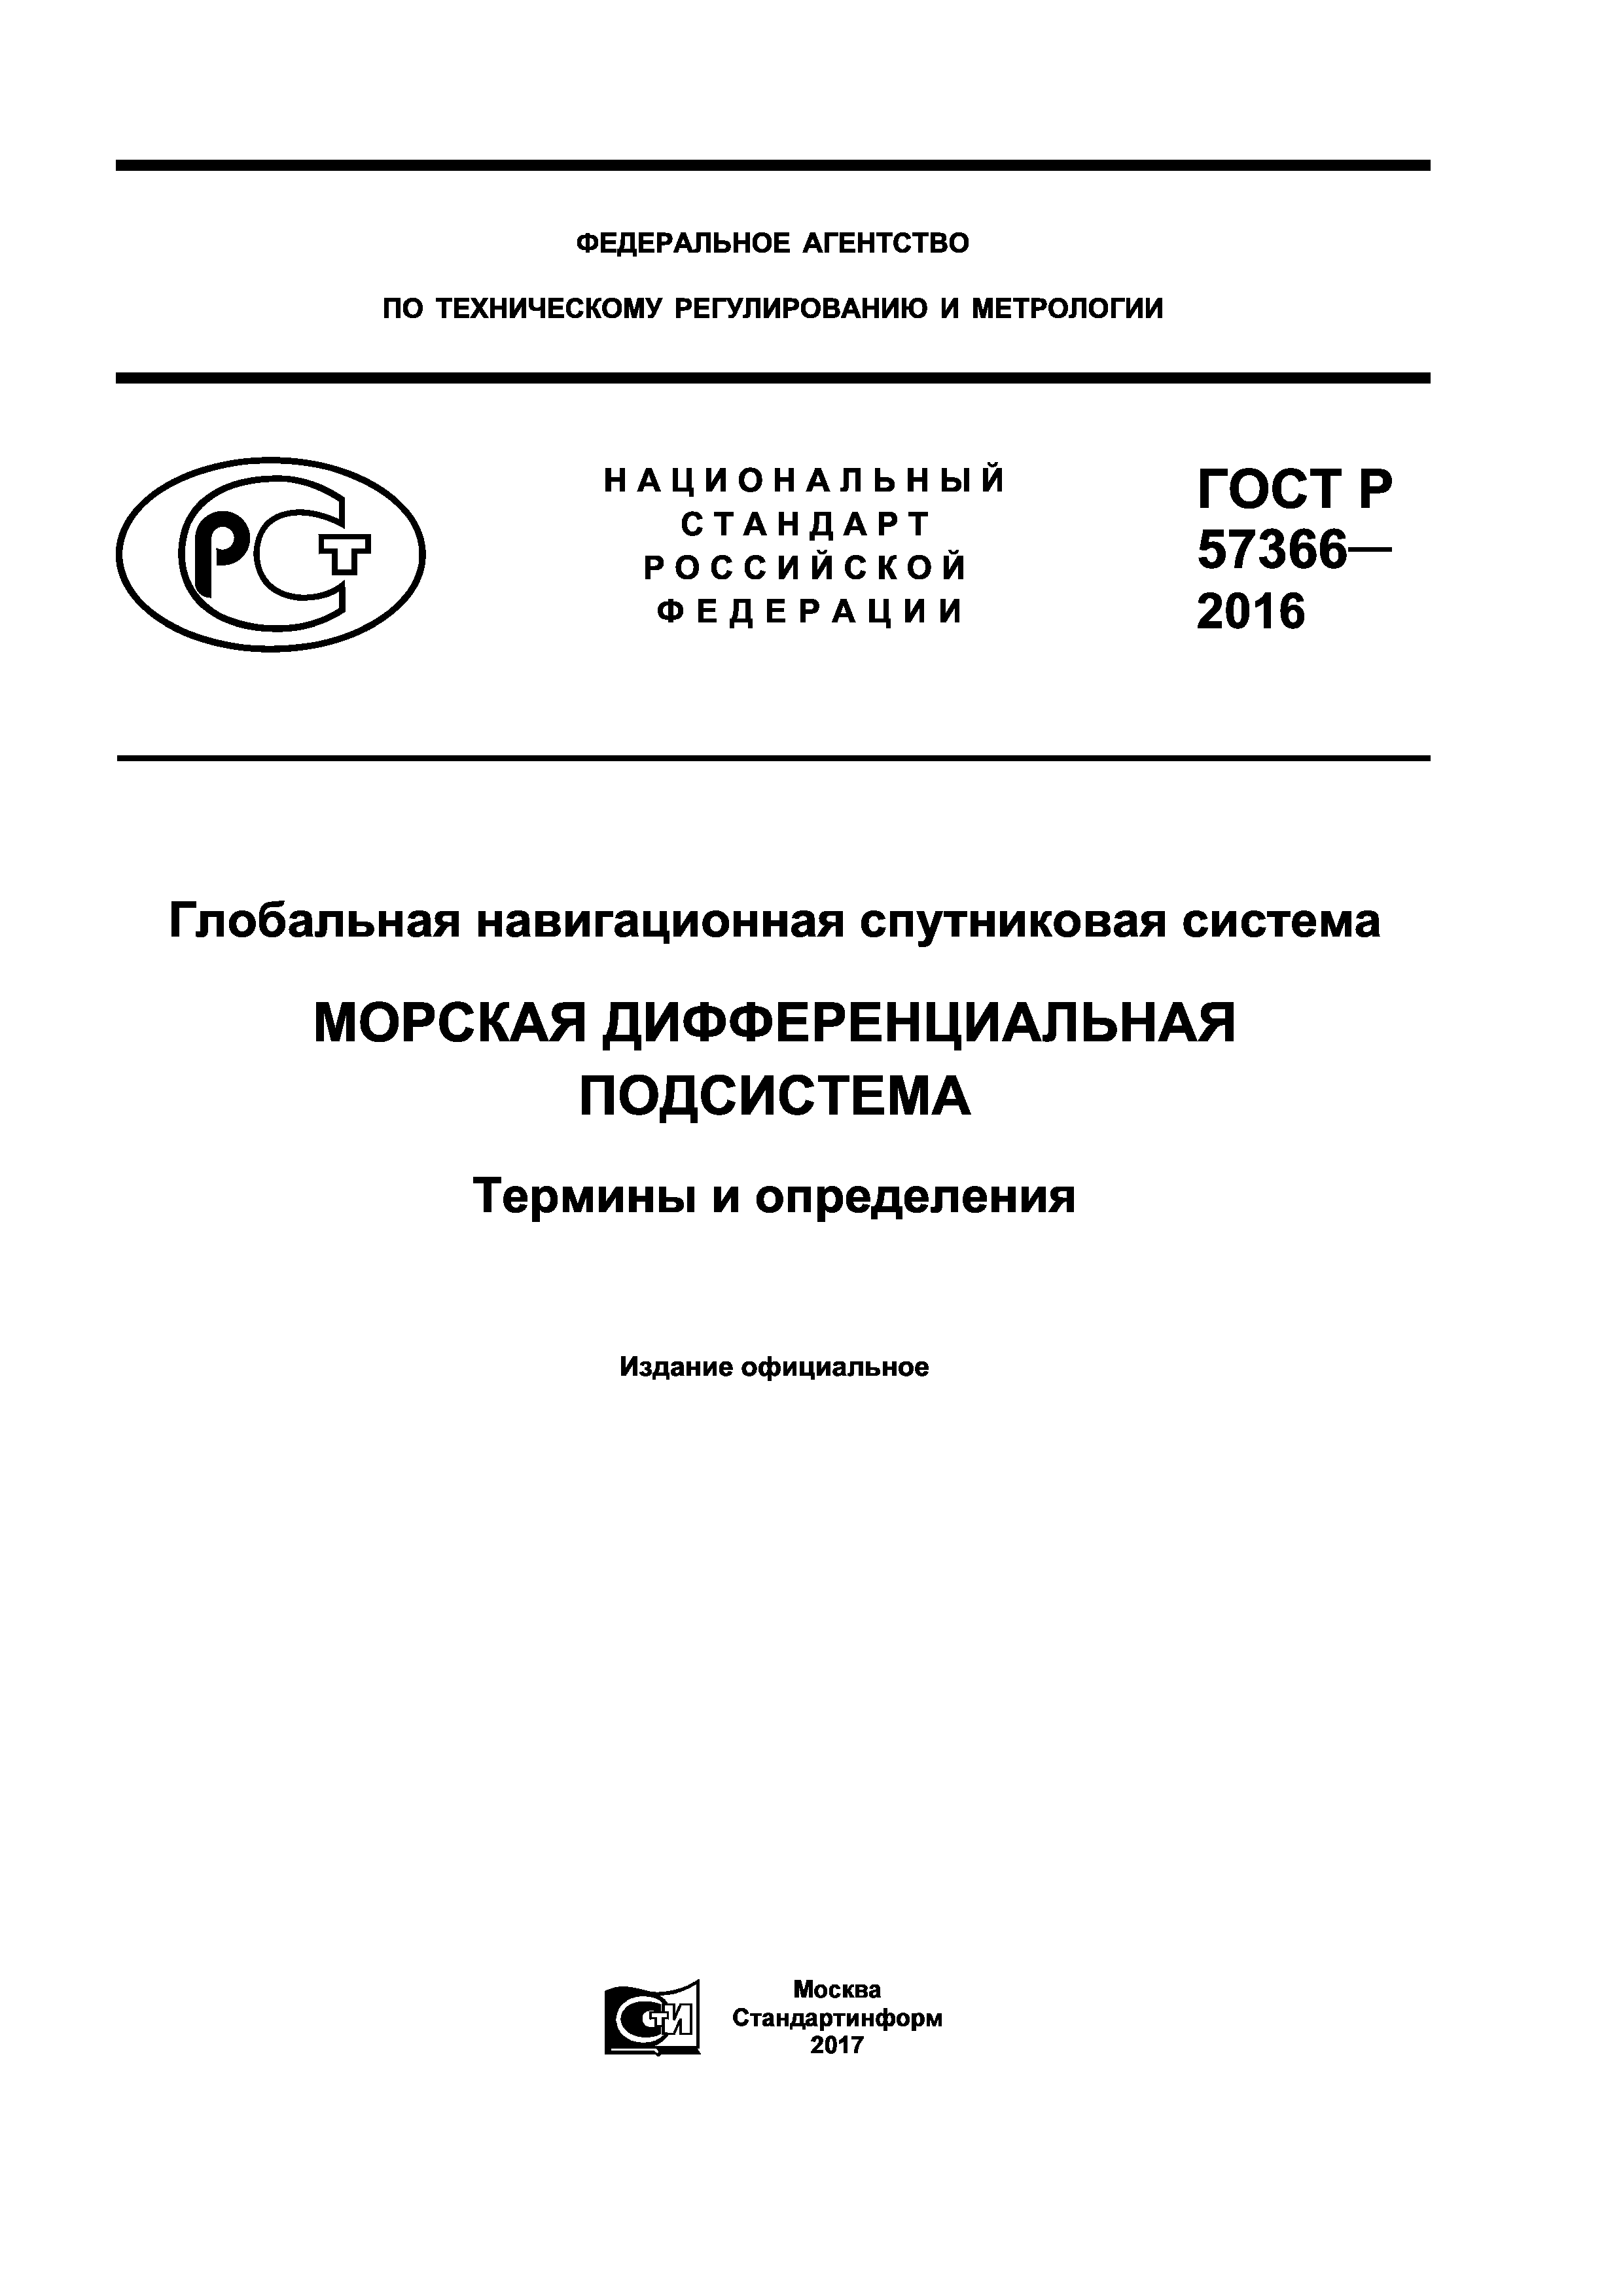 ГОСТ Р 57366-2016